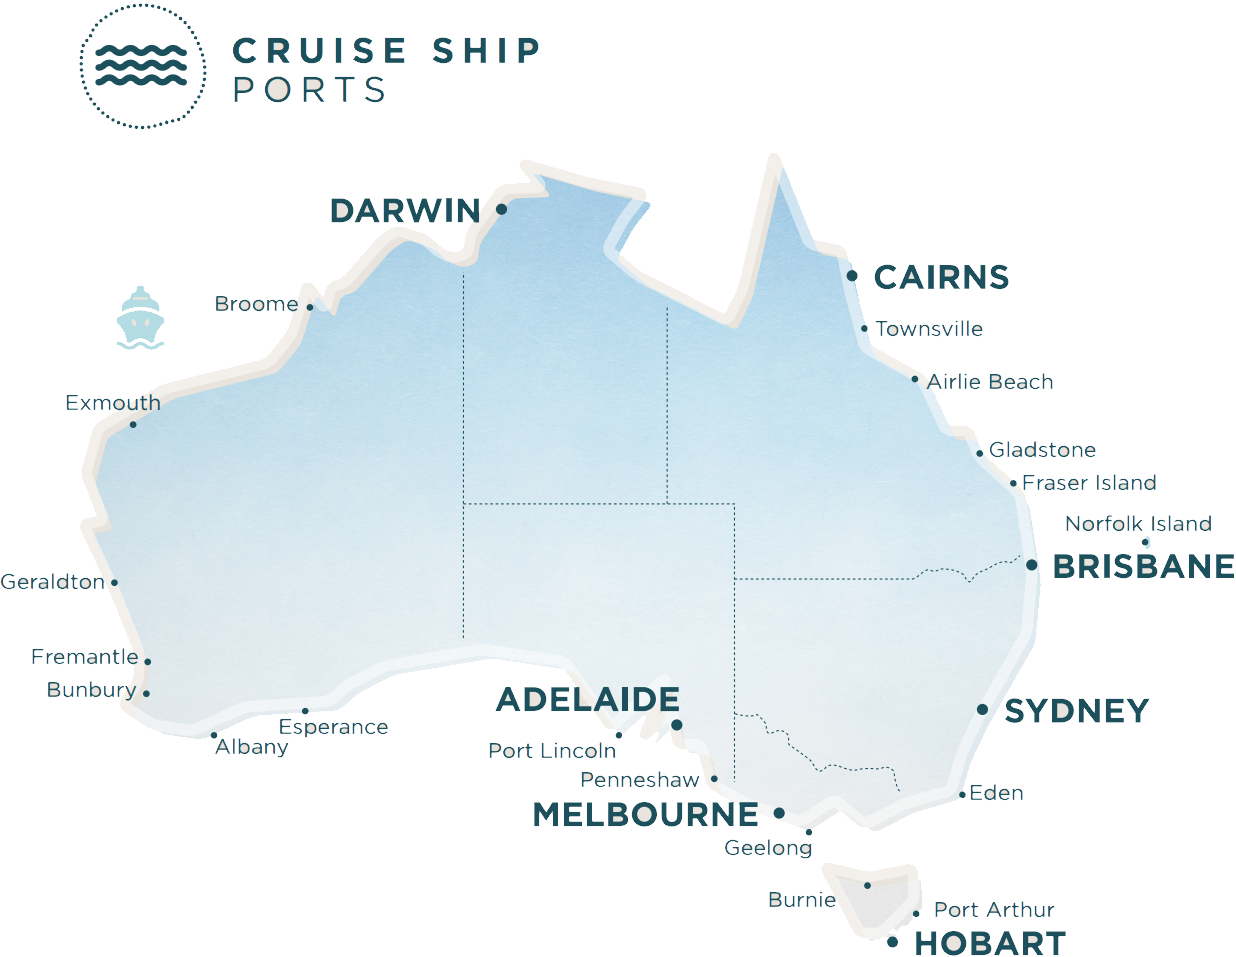 Map of Australian Cruise Ship Ports